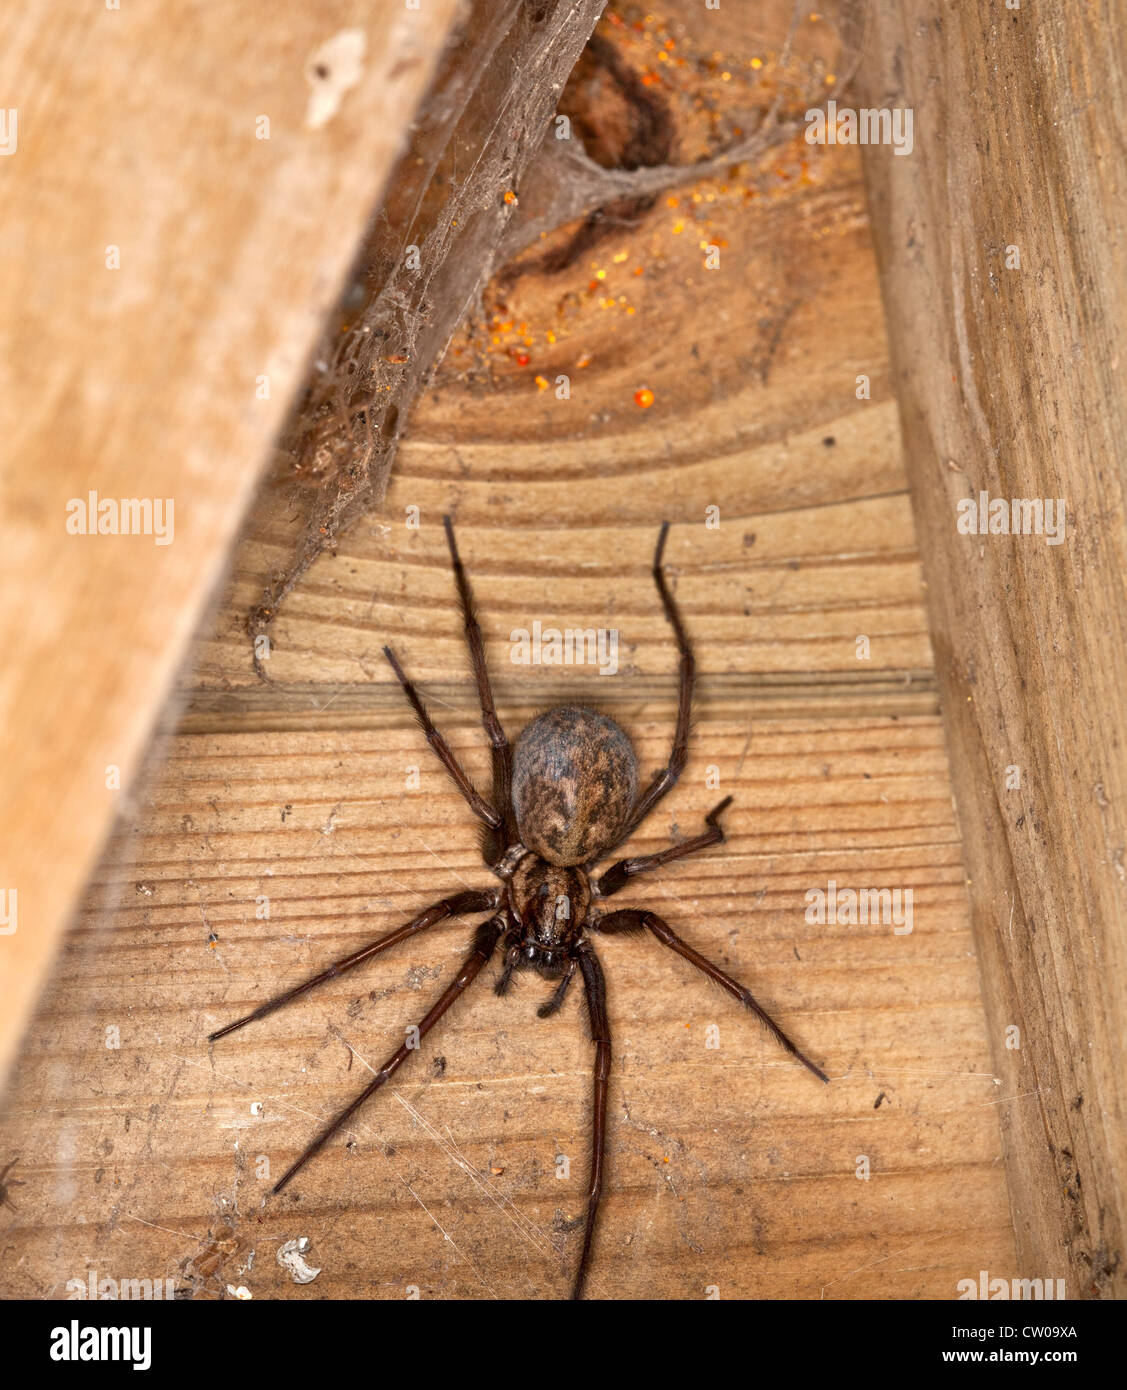 Tegenaria Gigantea Spider Stockfoto